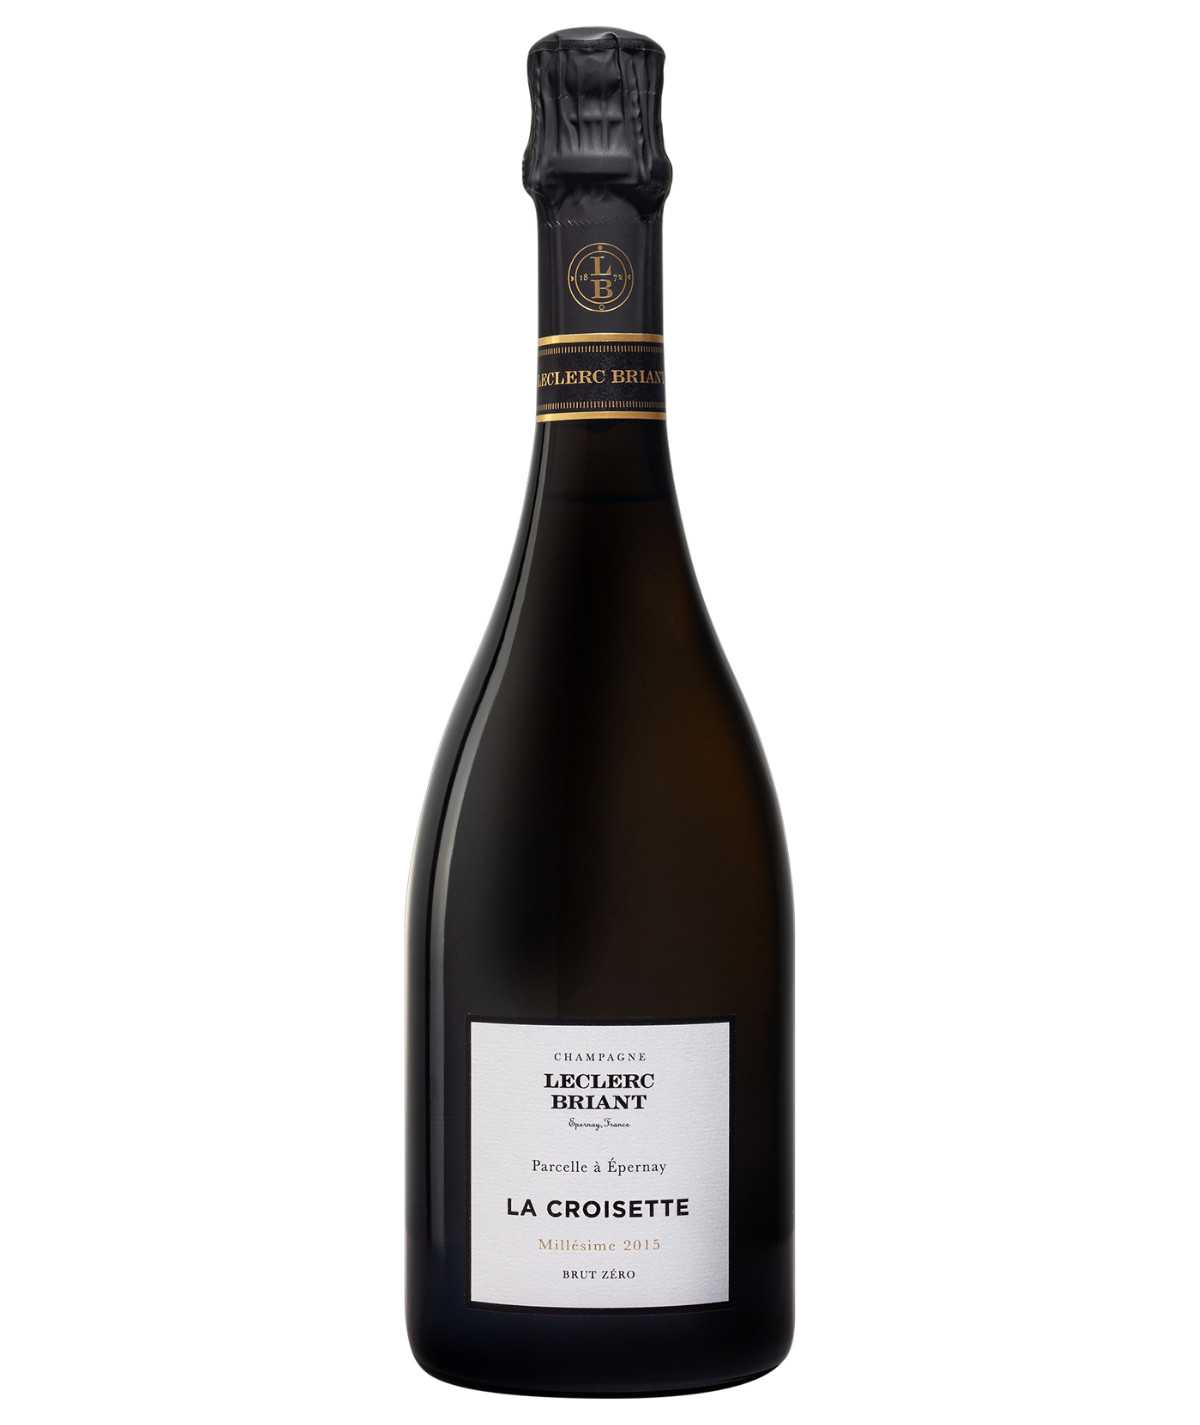 LECLERC-BRIANT champagne La Croisette 2015